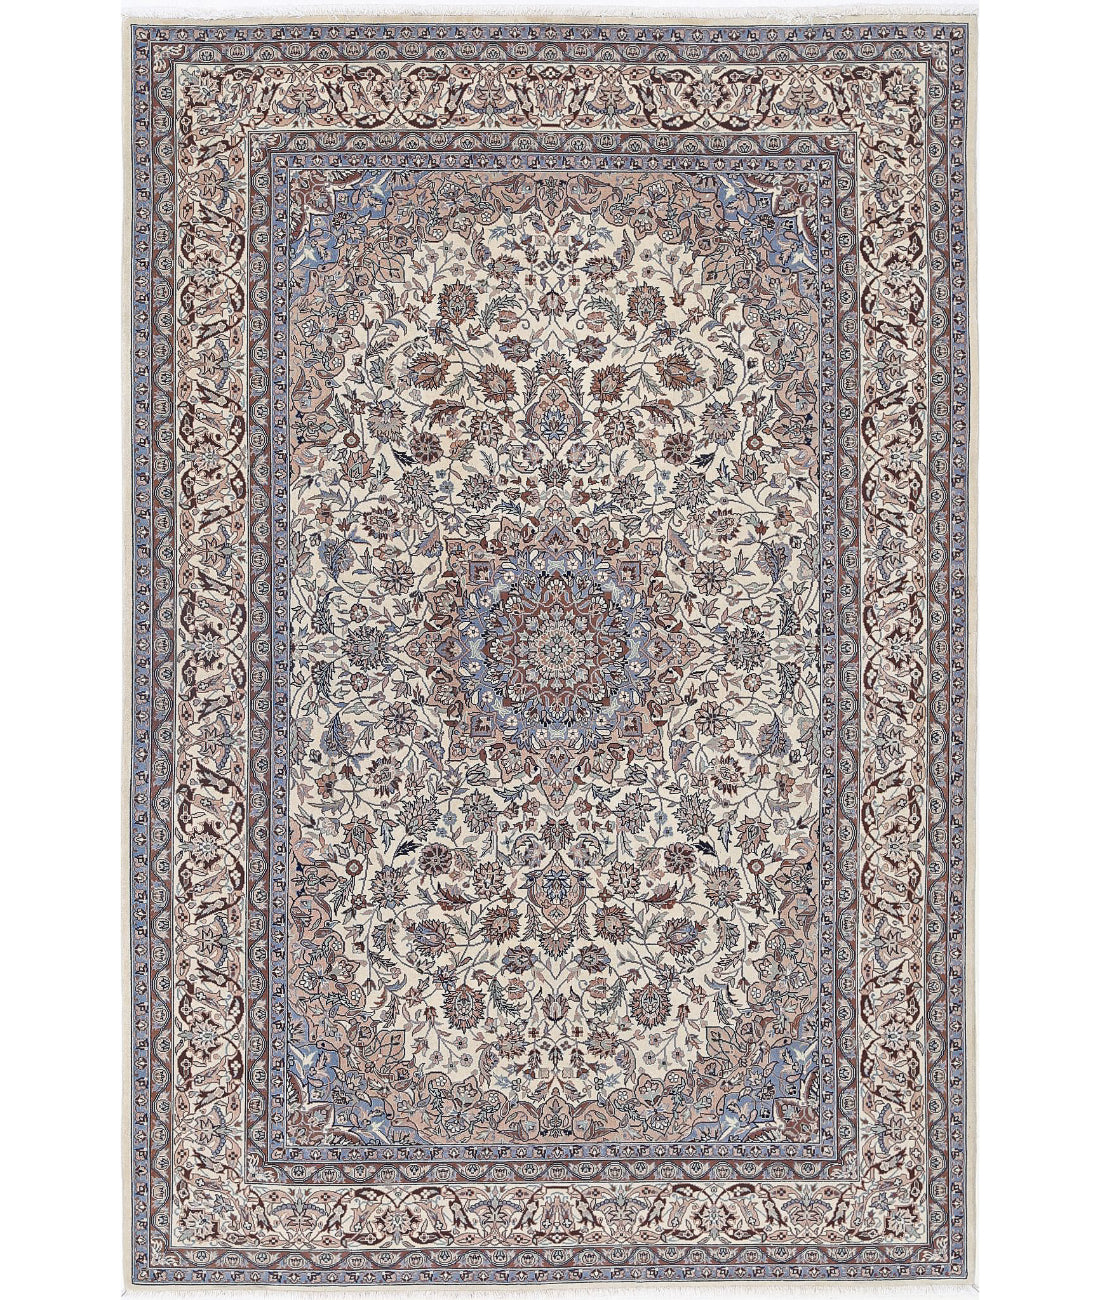 Heritage-hand-knotted-pak-persian-fine-wool-rug-5025317.jpg